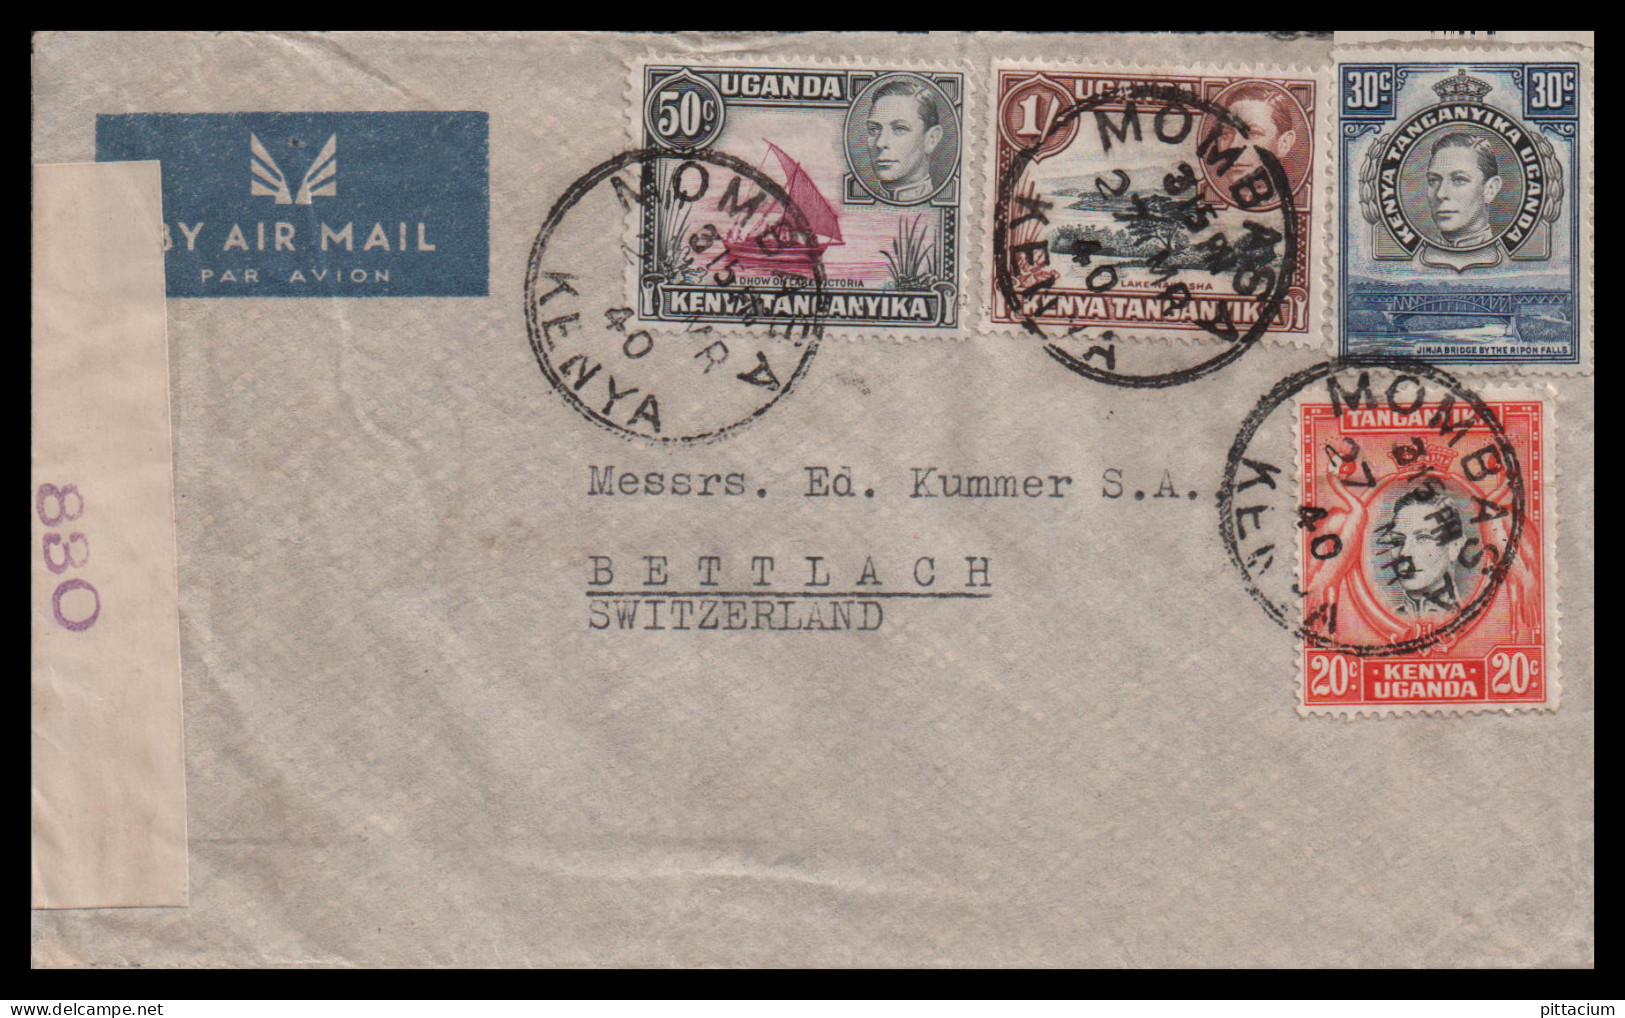 Grossbritannien Gebiete 1940: Luftpostbrief  | Afrika | Mombasa, Bettlach - Kenya & Uganda